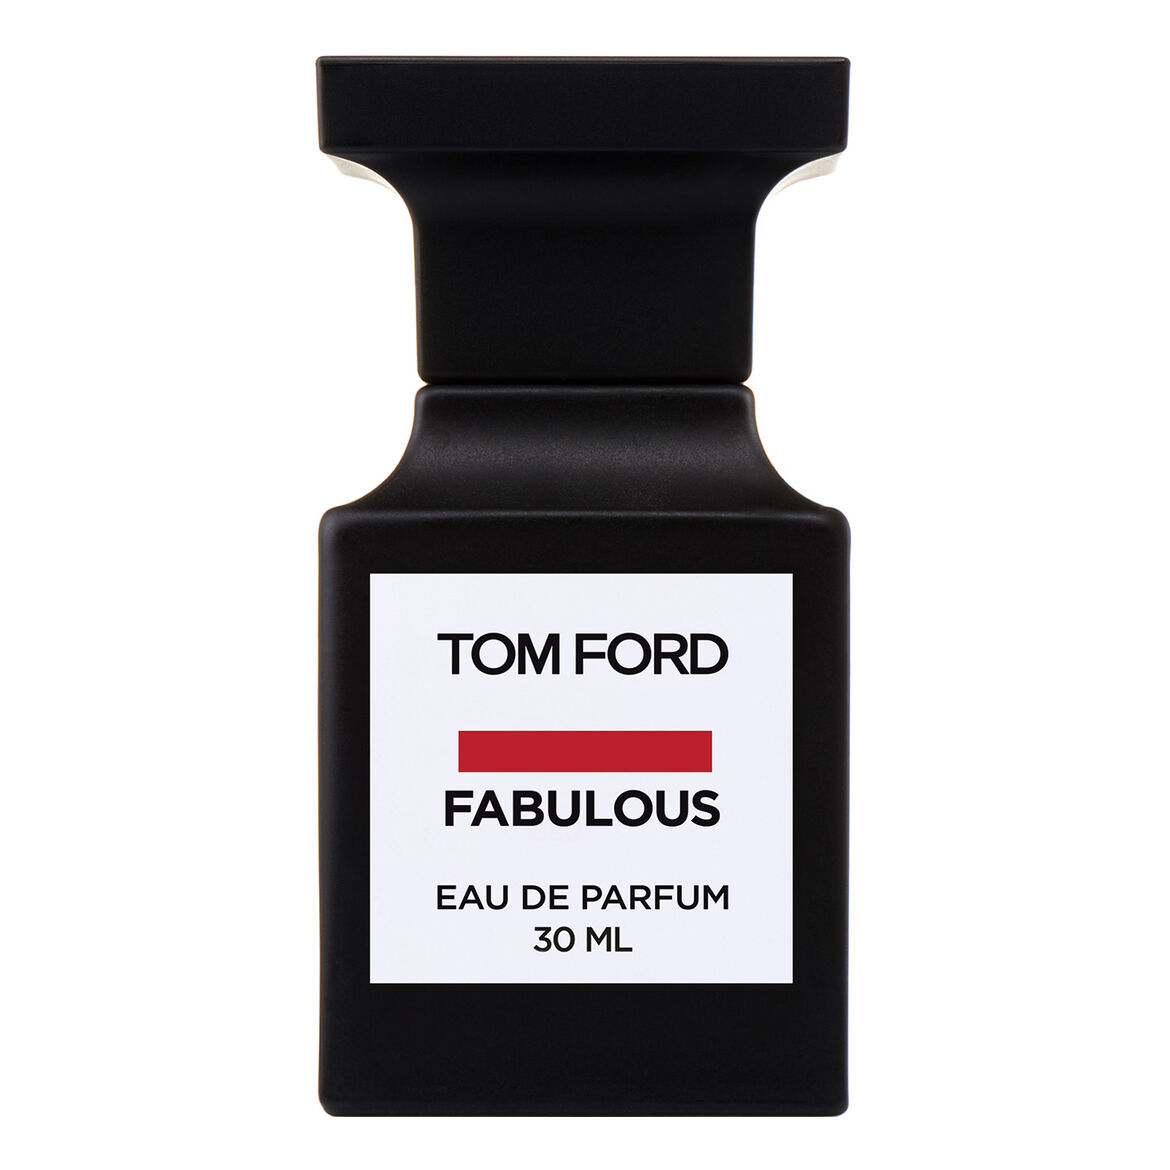 Nước Hoa TOM FORD Fabulous Eau De Parfum #30 mL